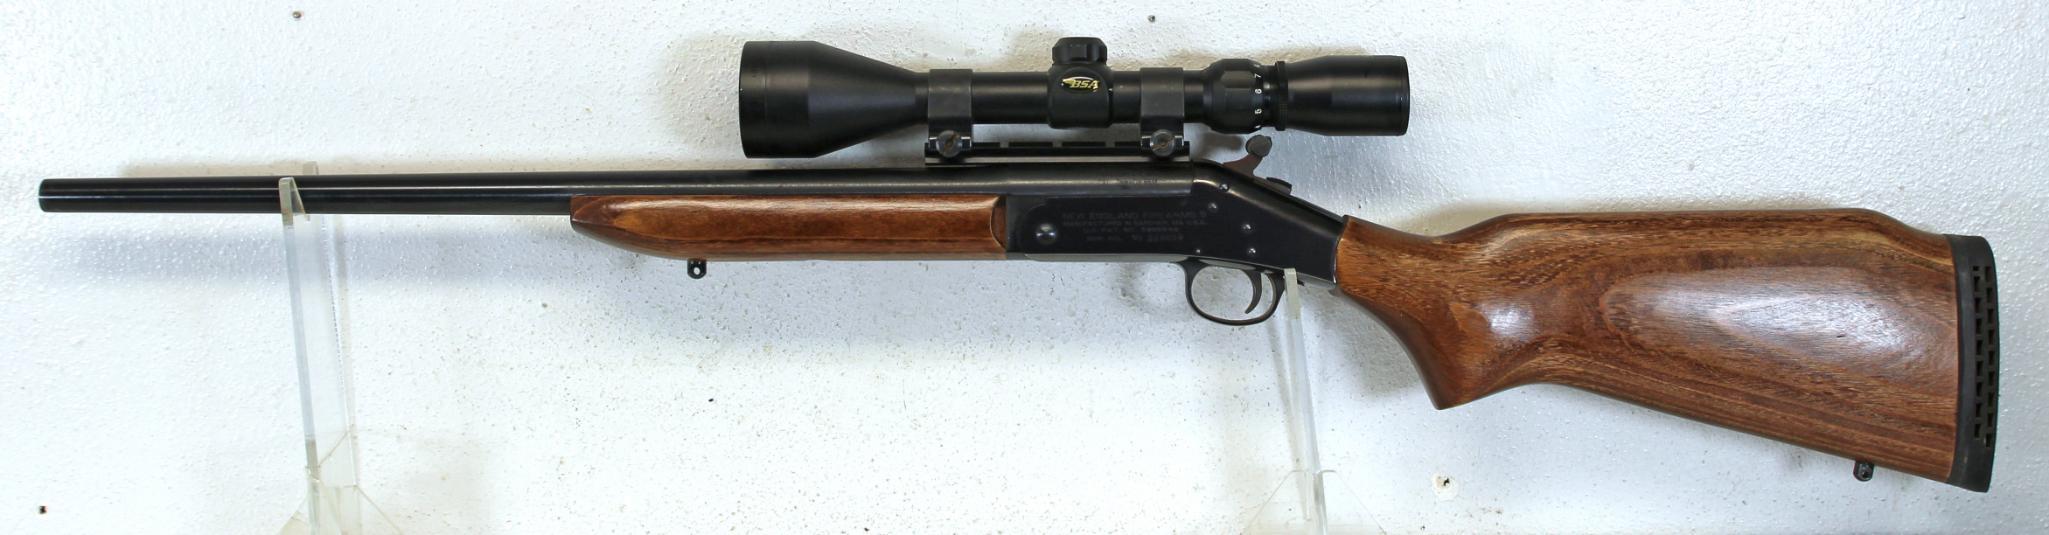 New England Firearms Handi-Rifle...7 mm-08 Rem. Single Shot Rifle w/BSA 3-9x50 Scope 22" Barrel... S